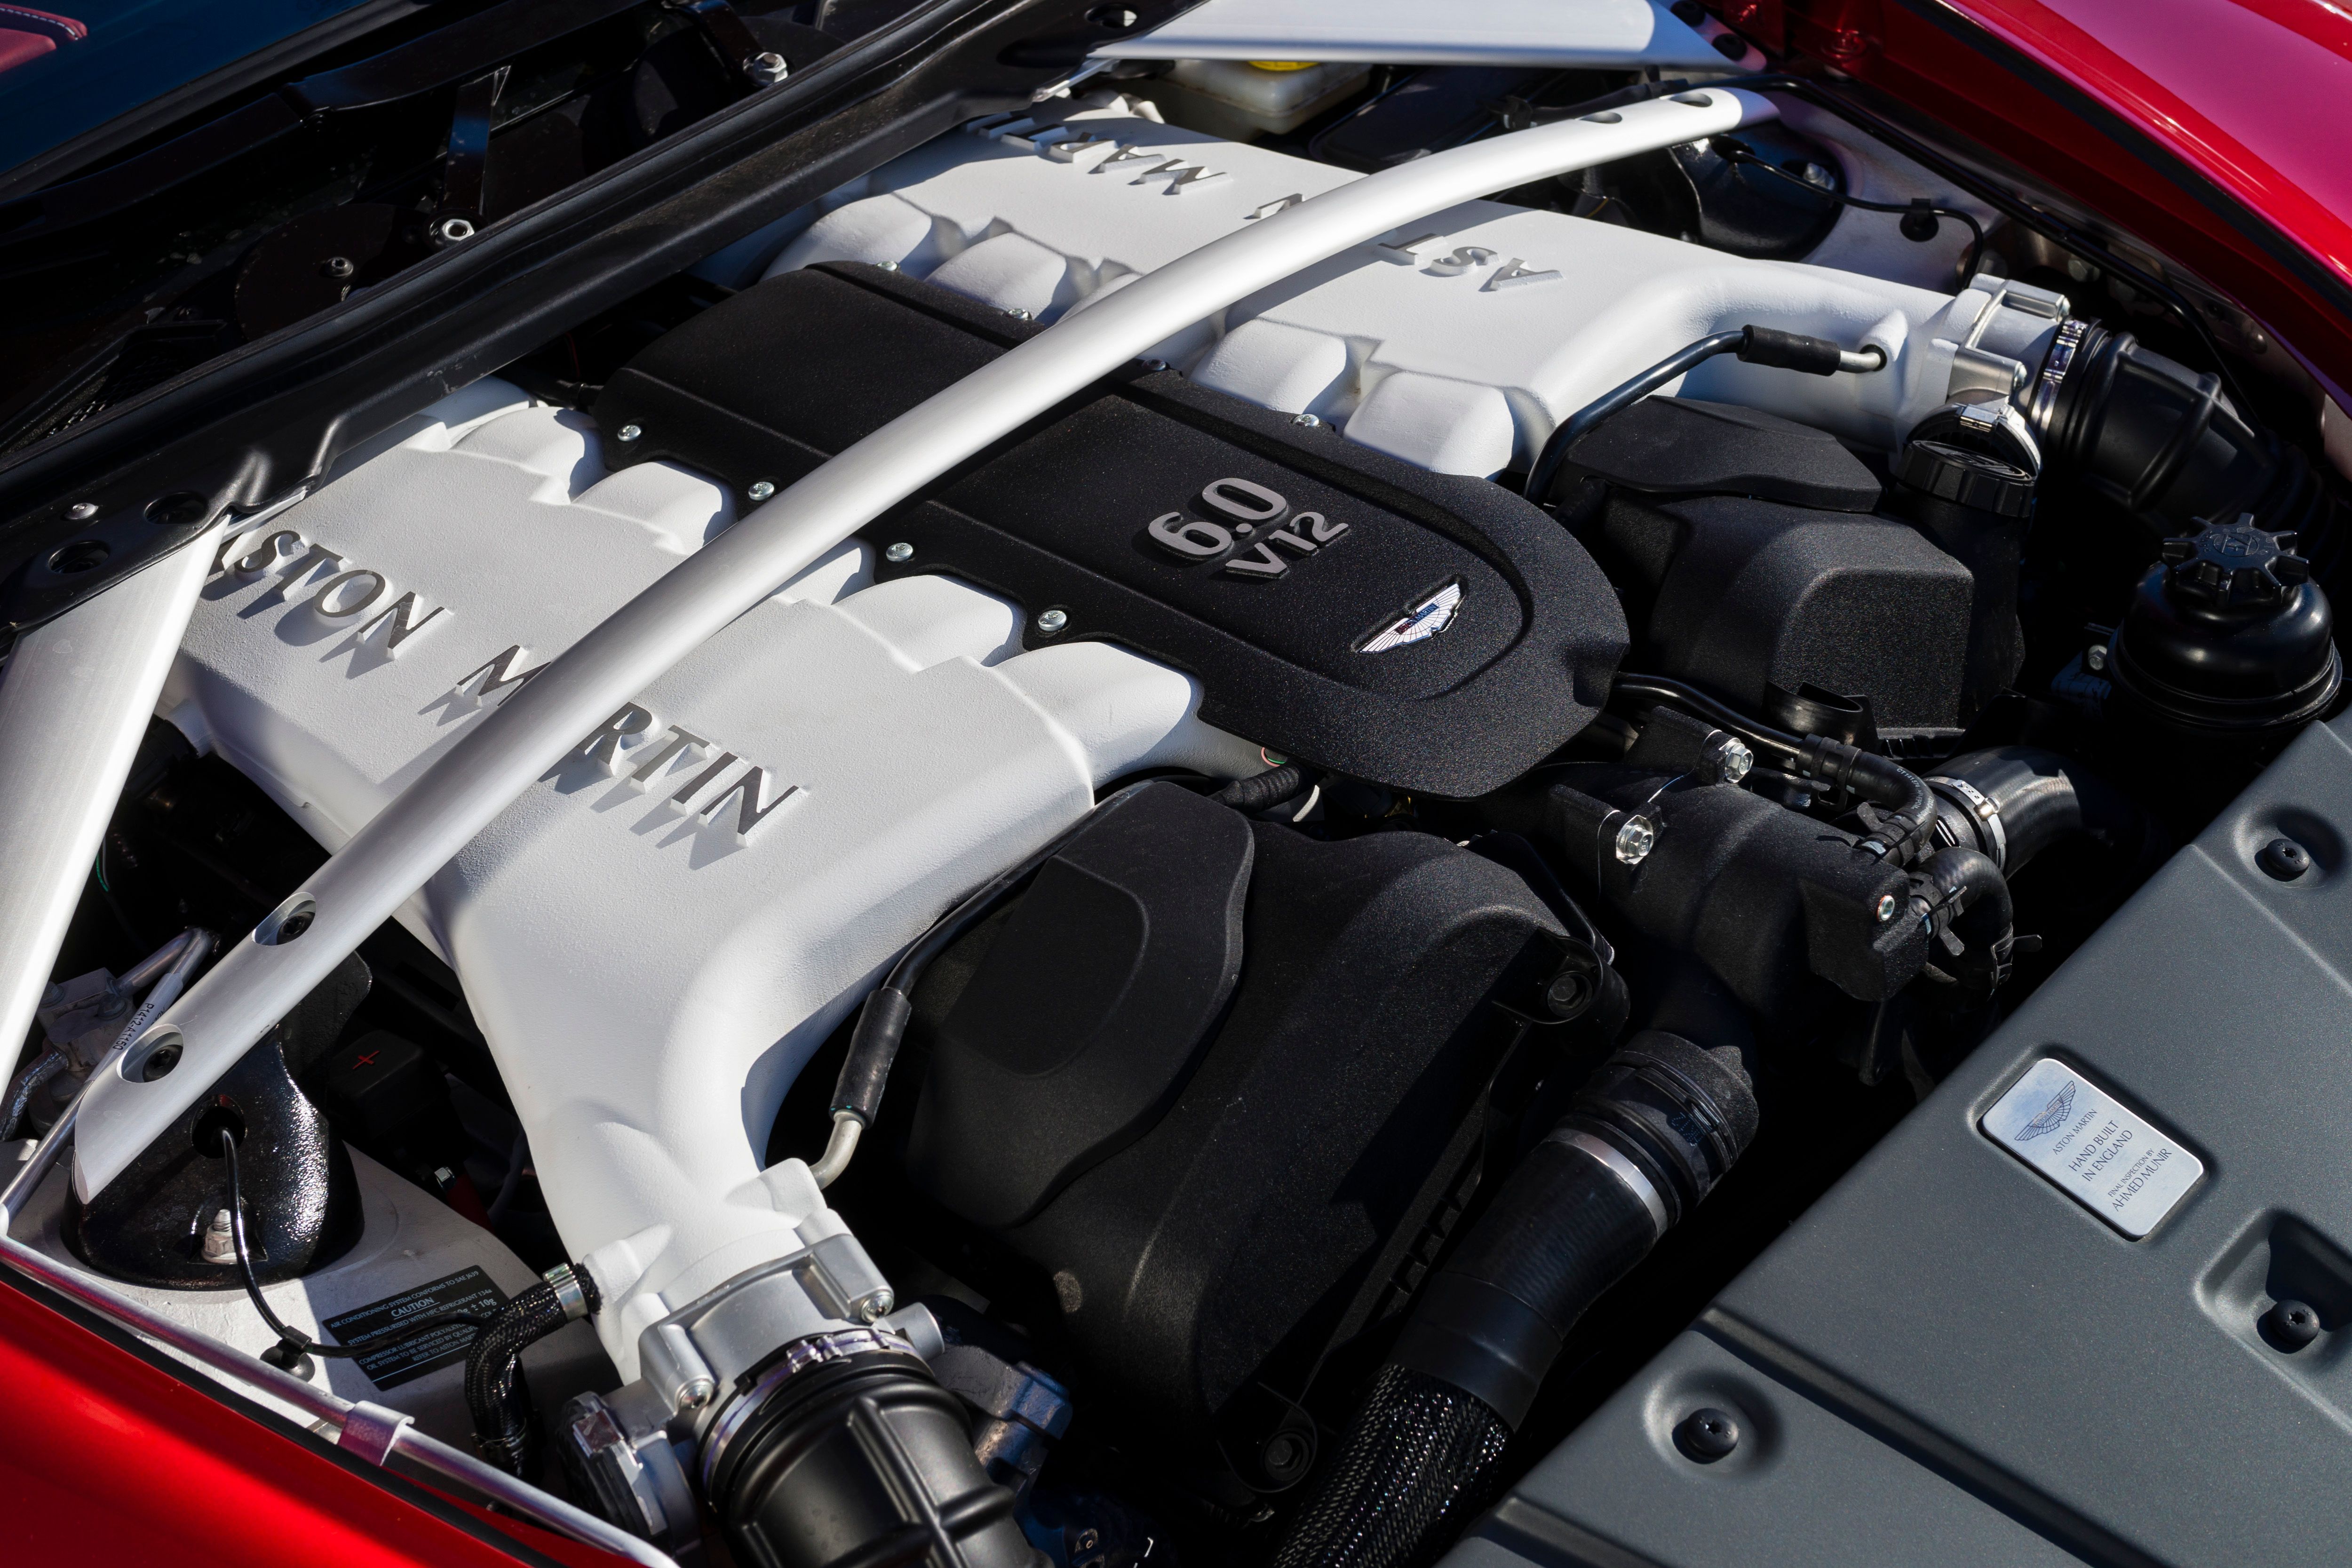 An Aston Martin V12 Vantage S engine.